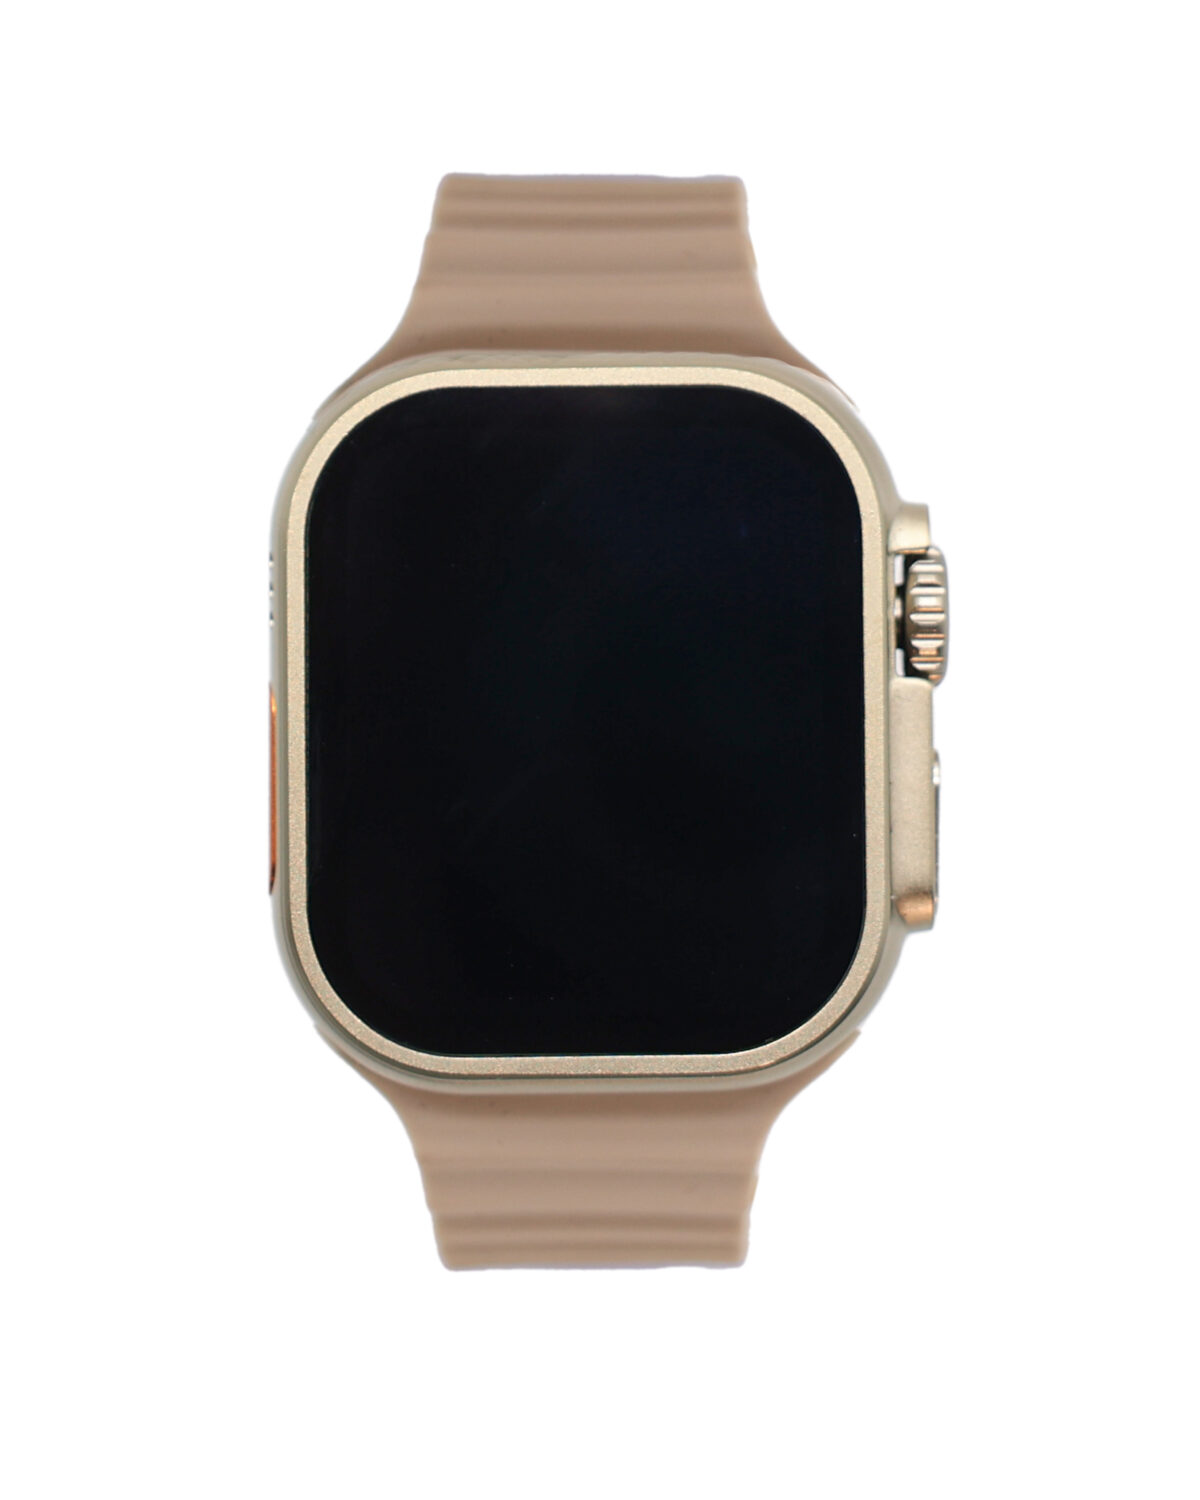 Amax ultra smart watch